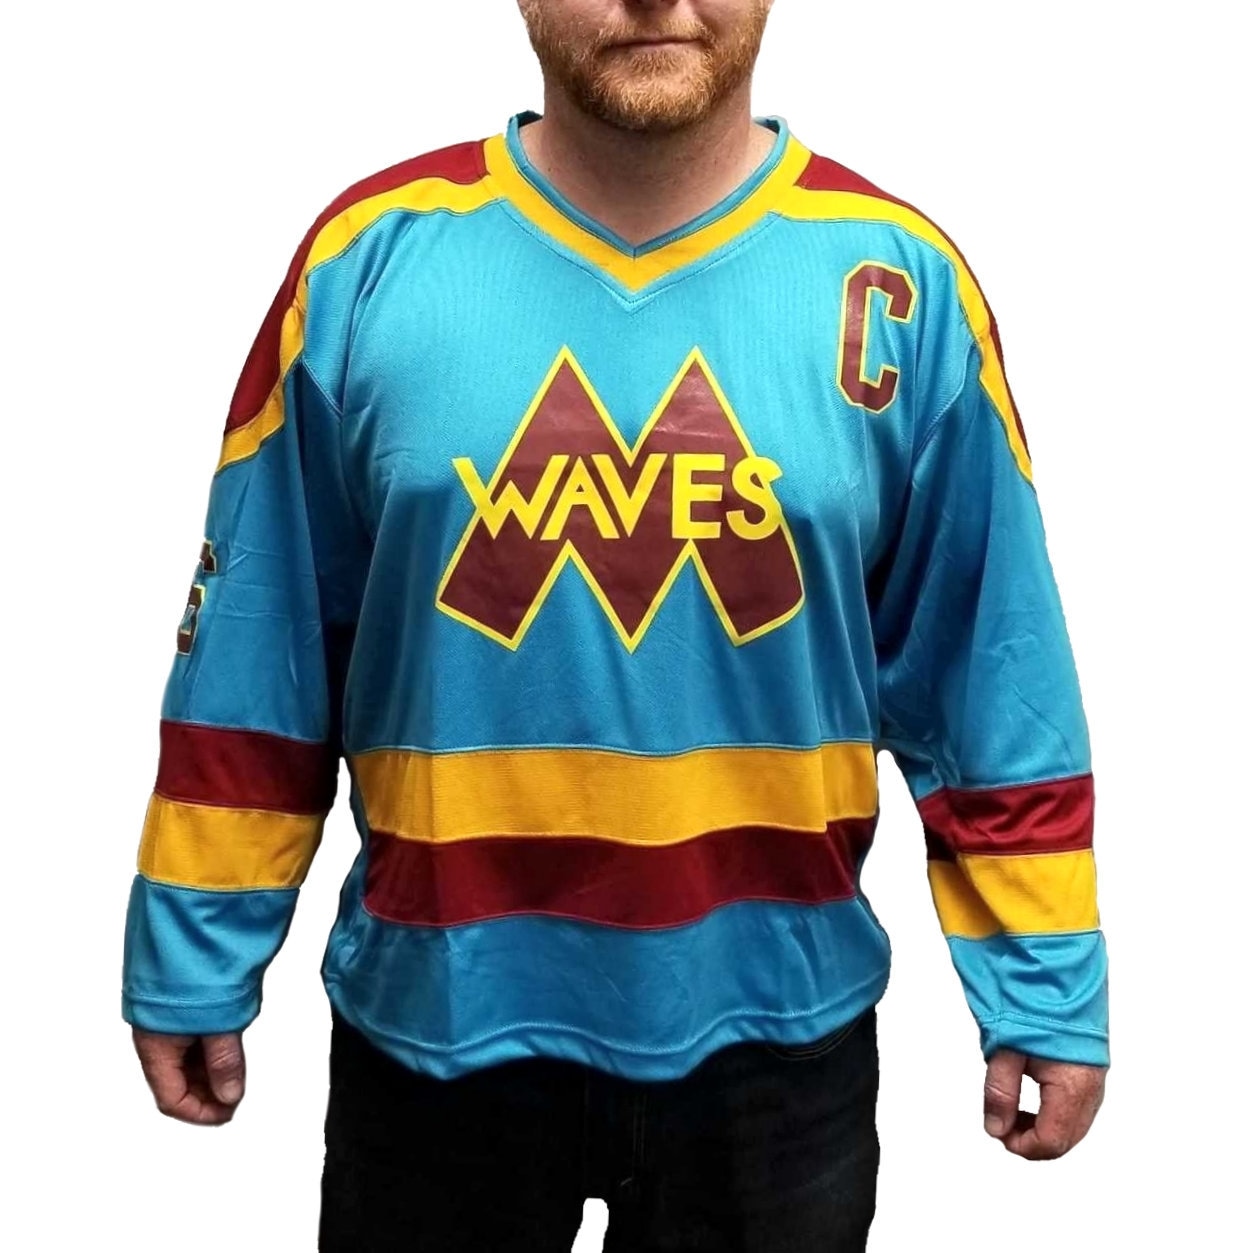 Mighty Ducks Logo Hockey Jersey Movie Player 90s Costume Uniform Sweater Group 